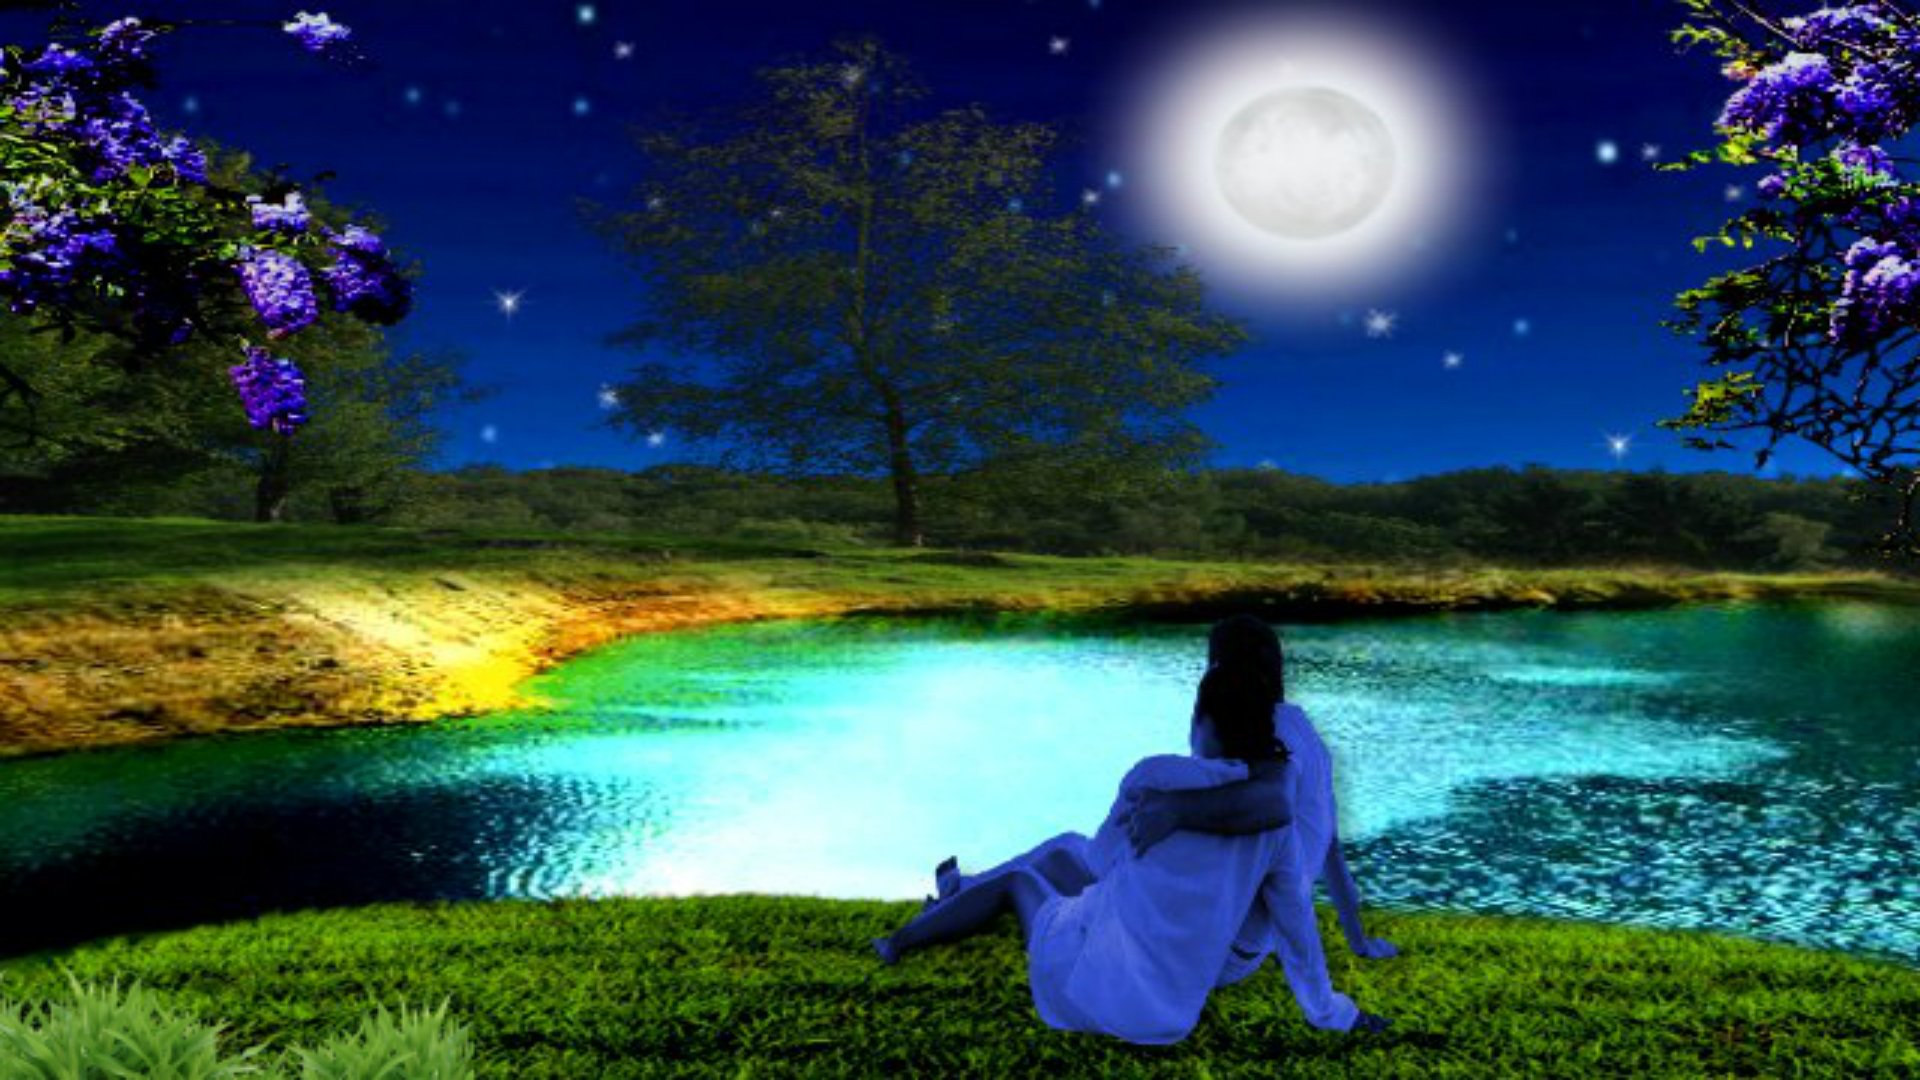 Romantic Night At The Lake Wallpaper - Romantic Nature Images Hd - HD Wallpaper 